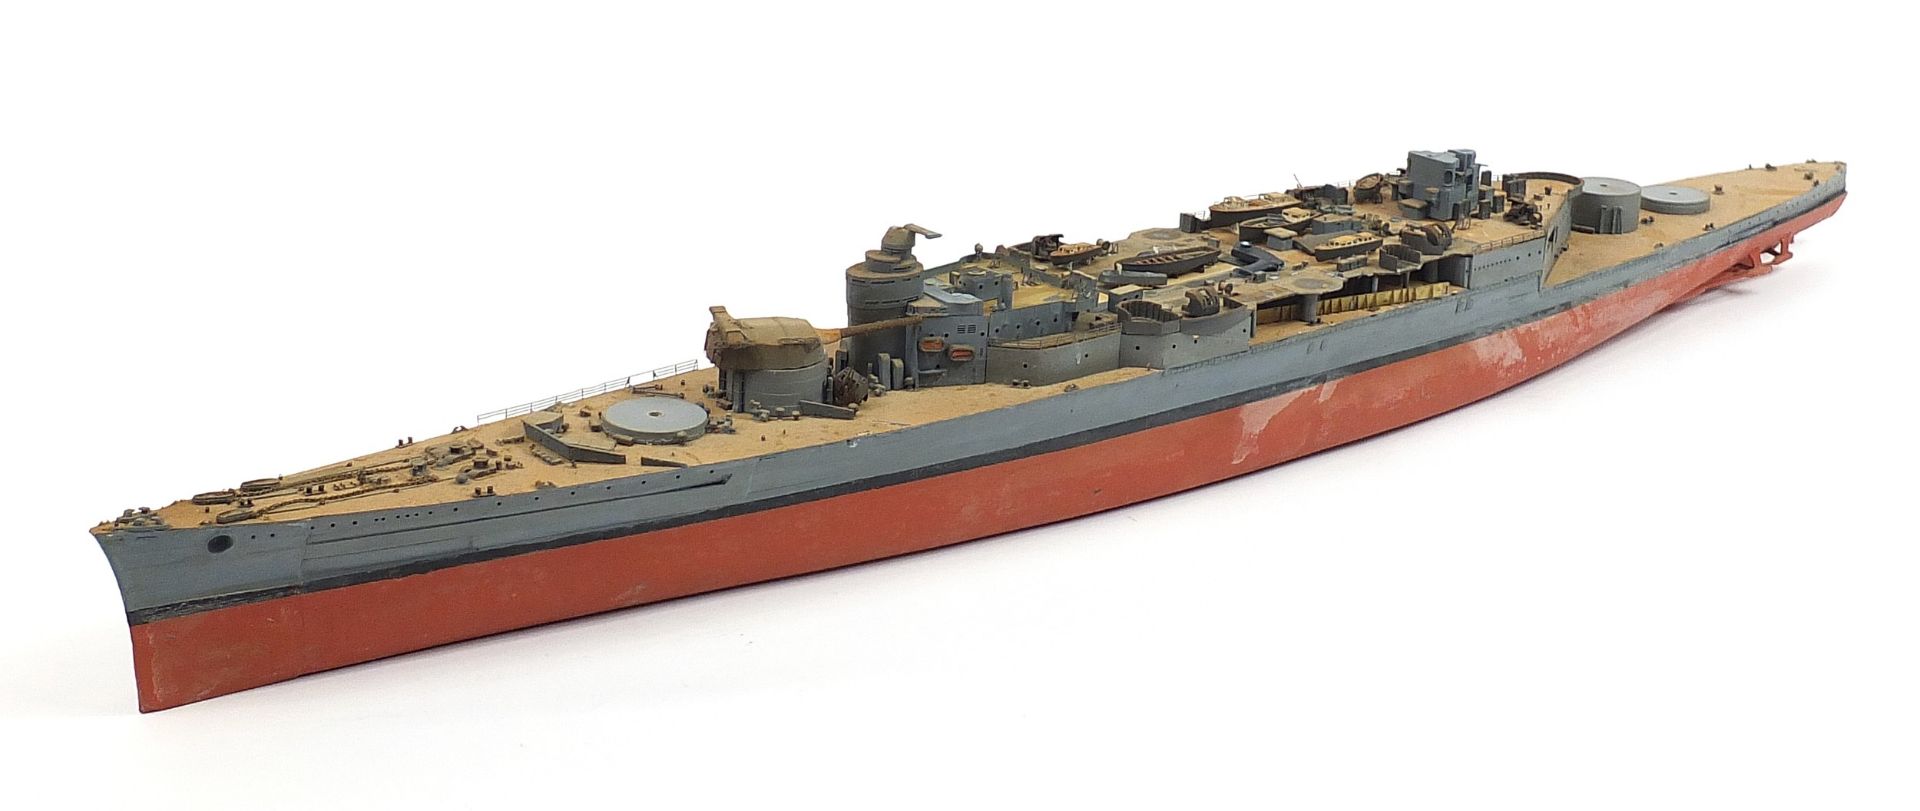 Large military interest model boat, 140cm in length